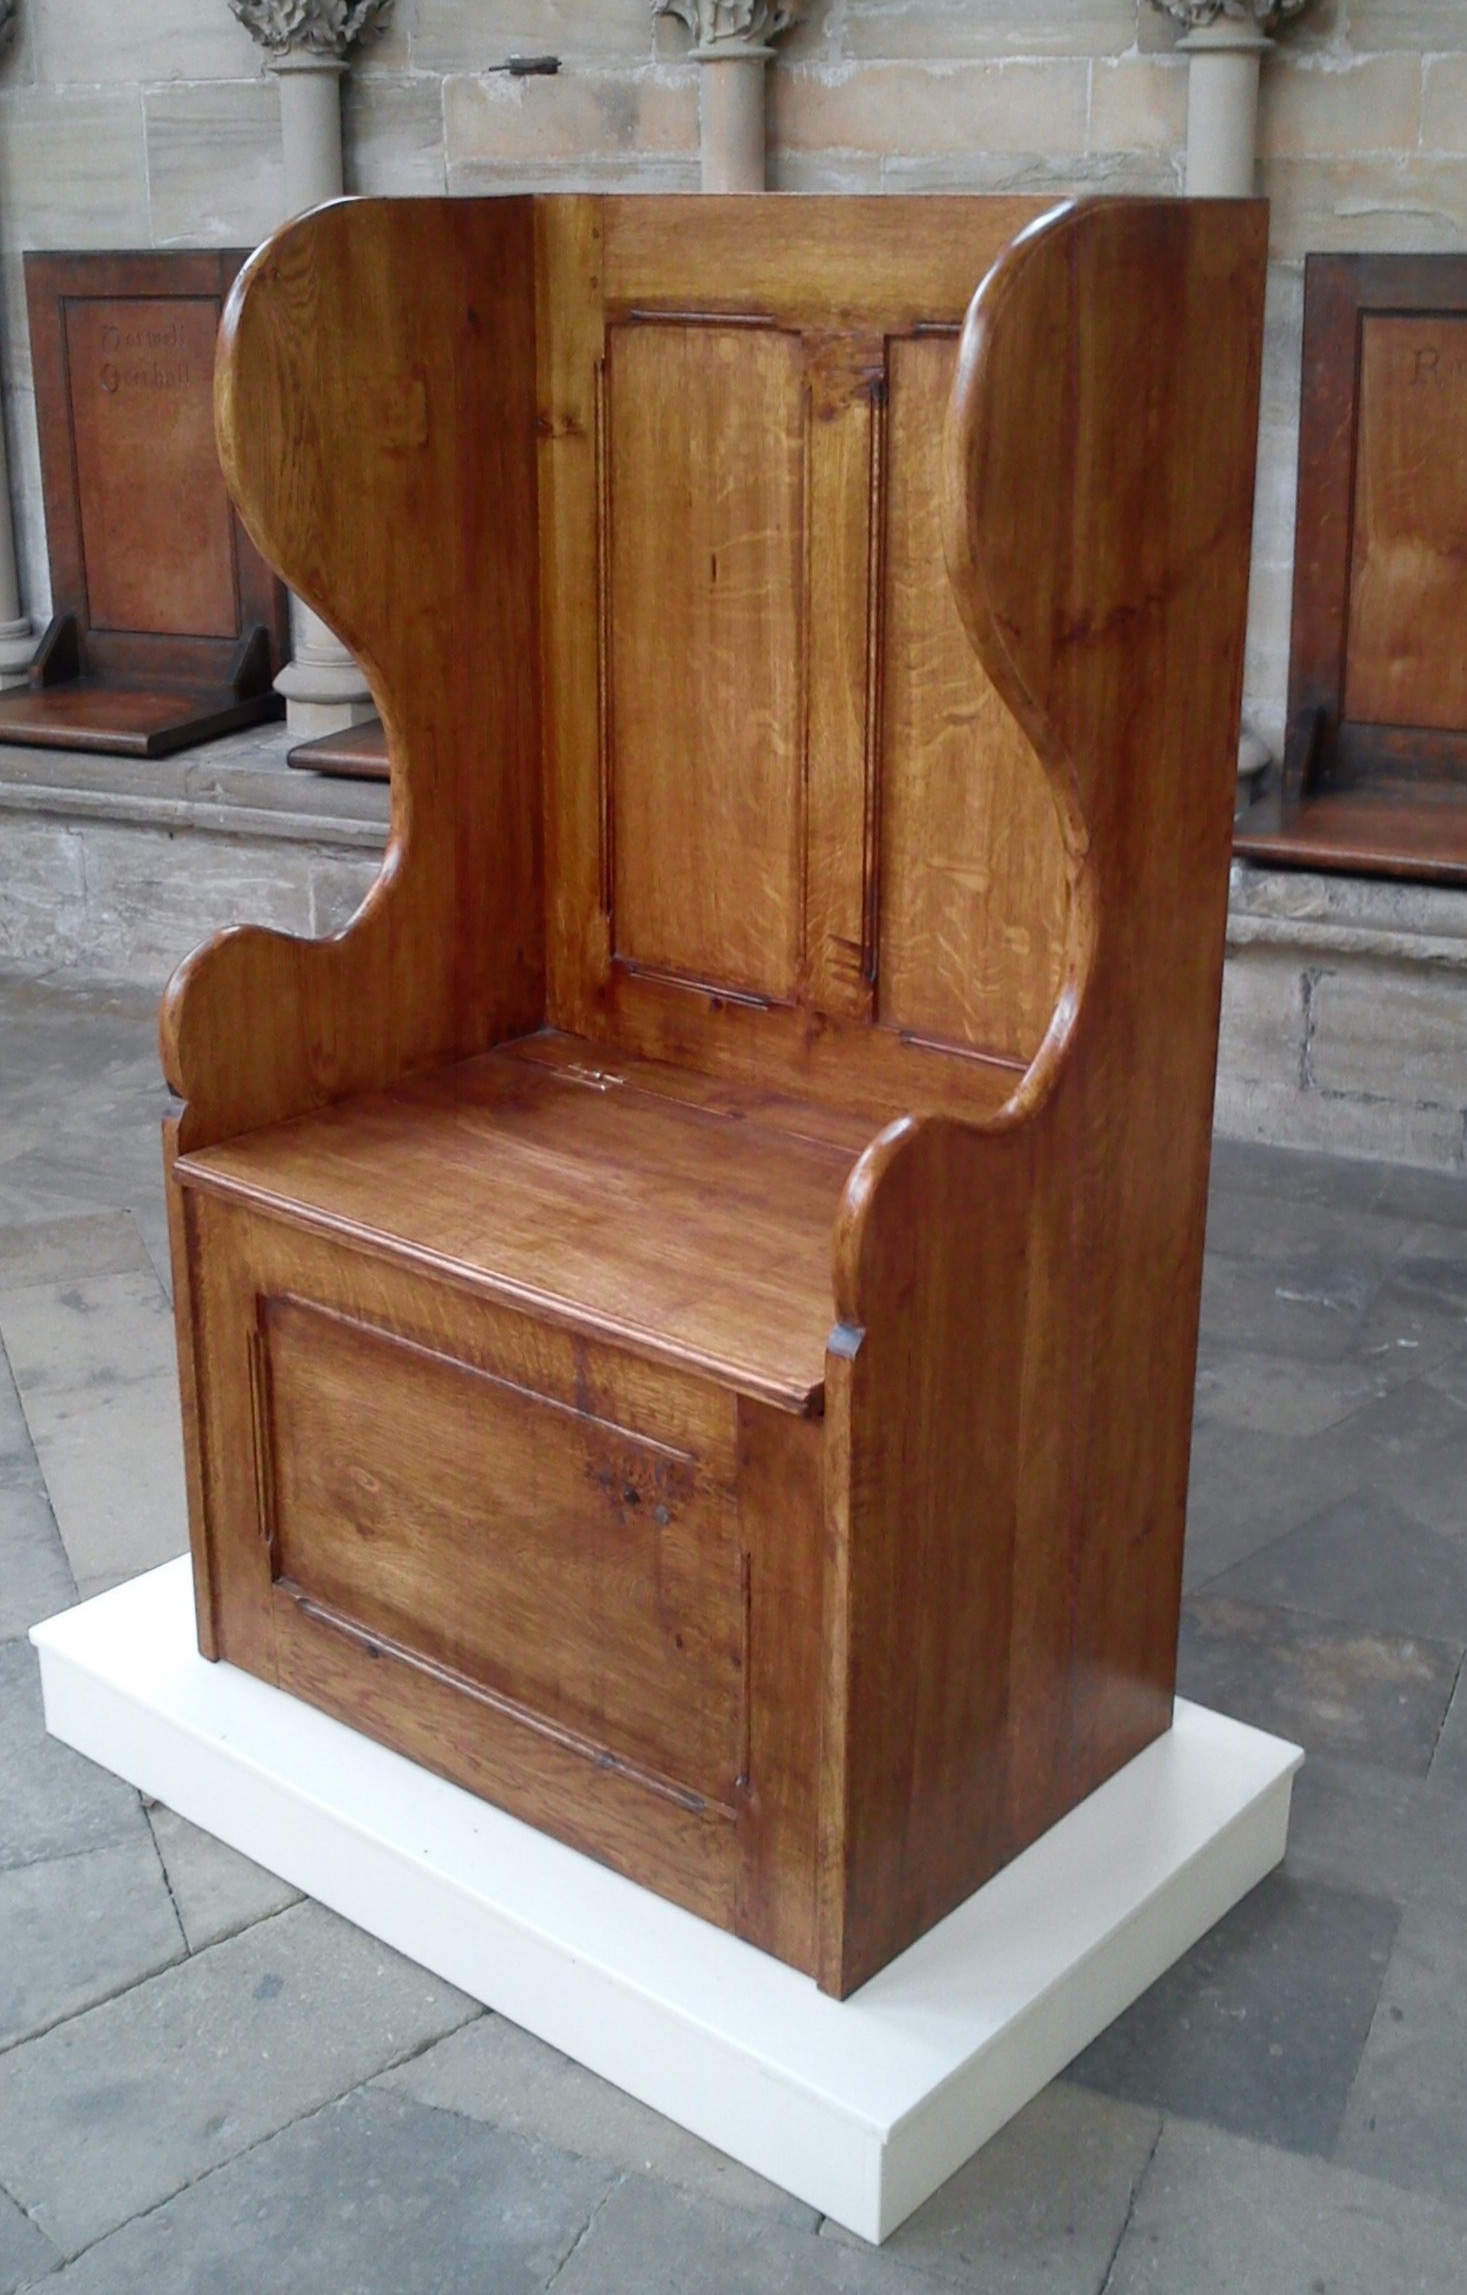 Monk's Seat